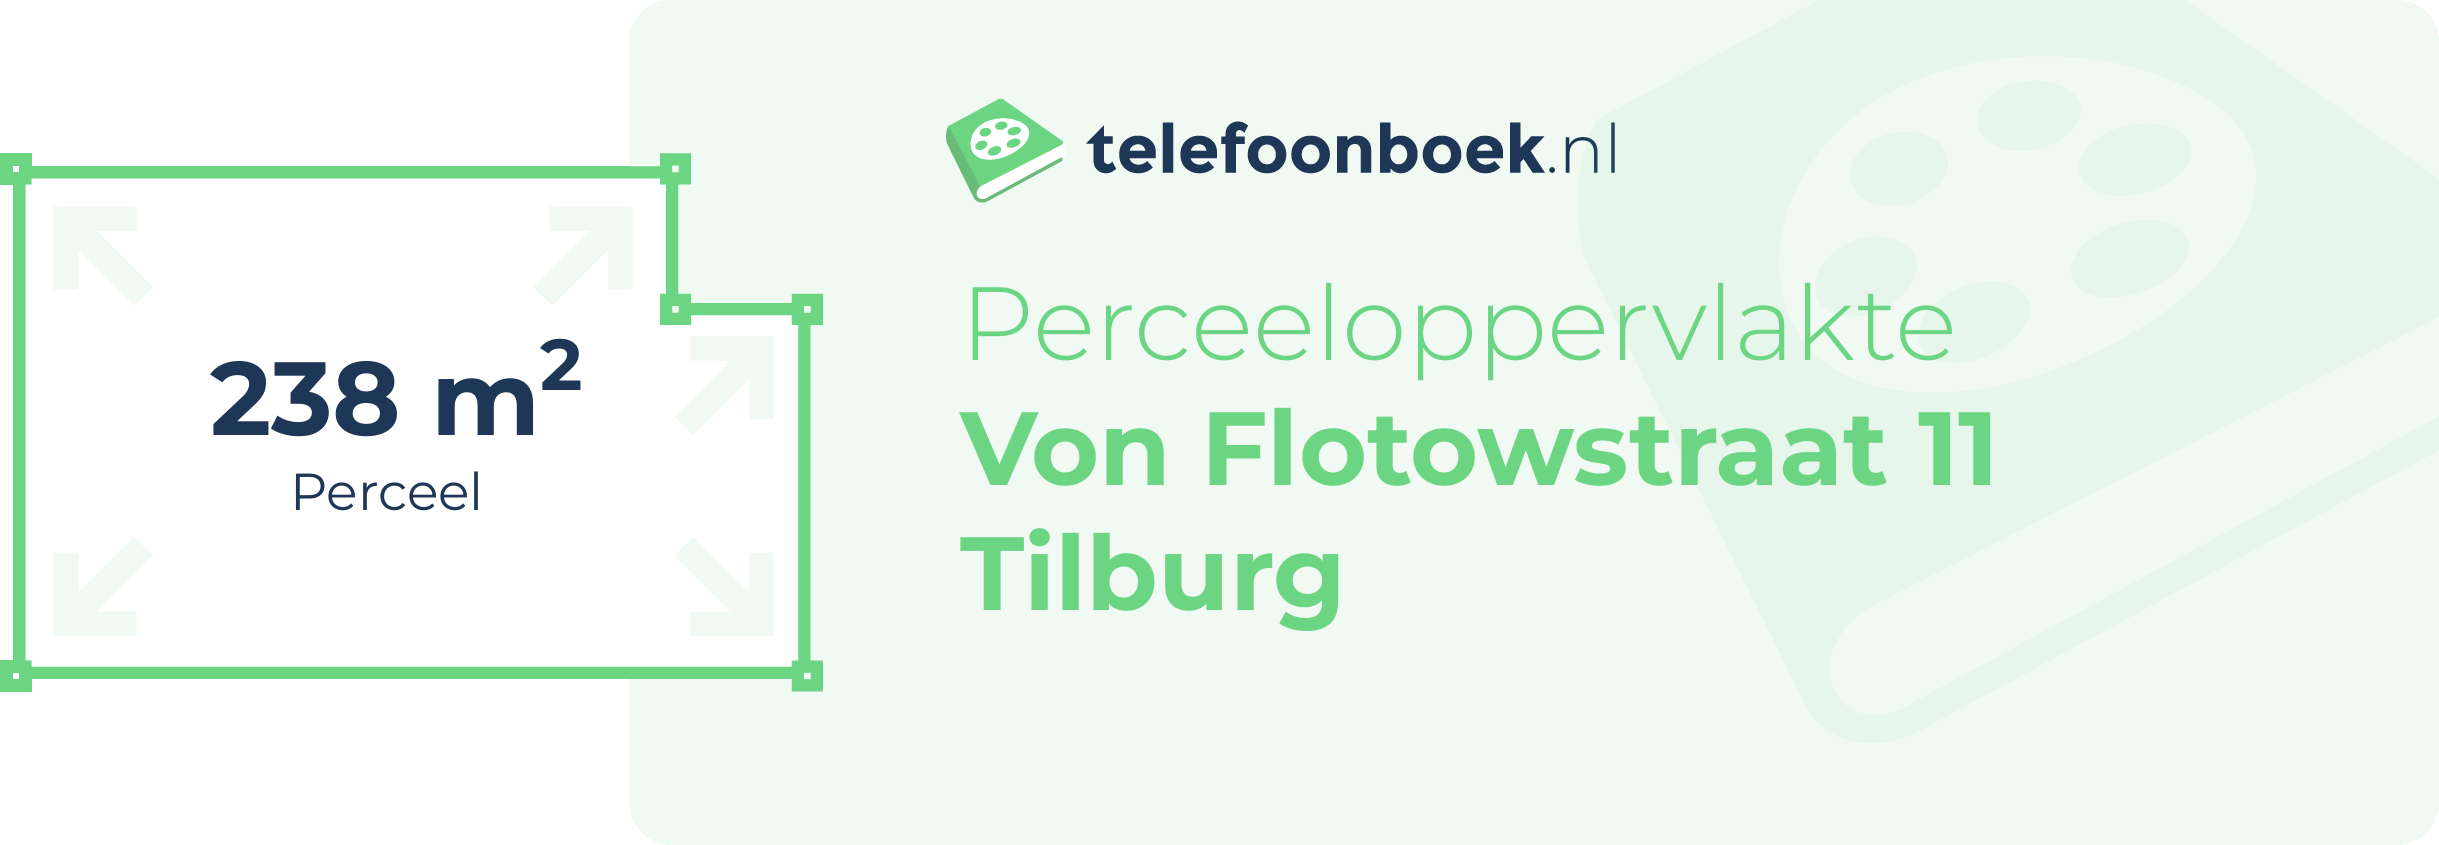 Perceeloppervlakte Von Flotowstraat 11 Tilburg